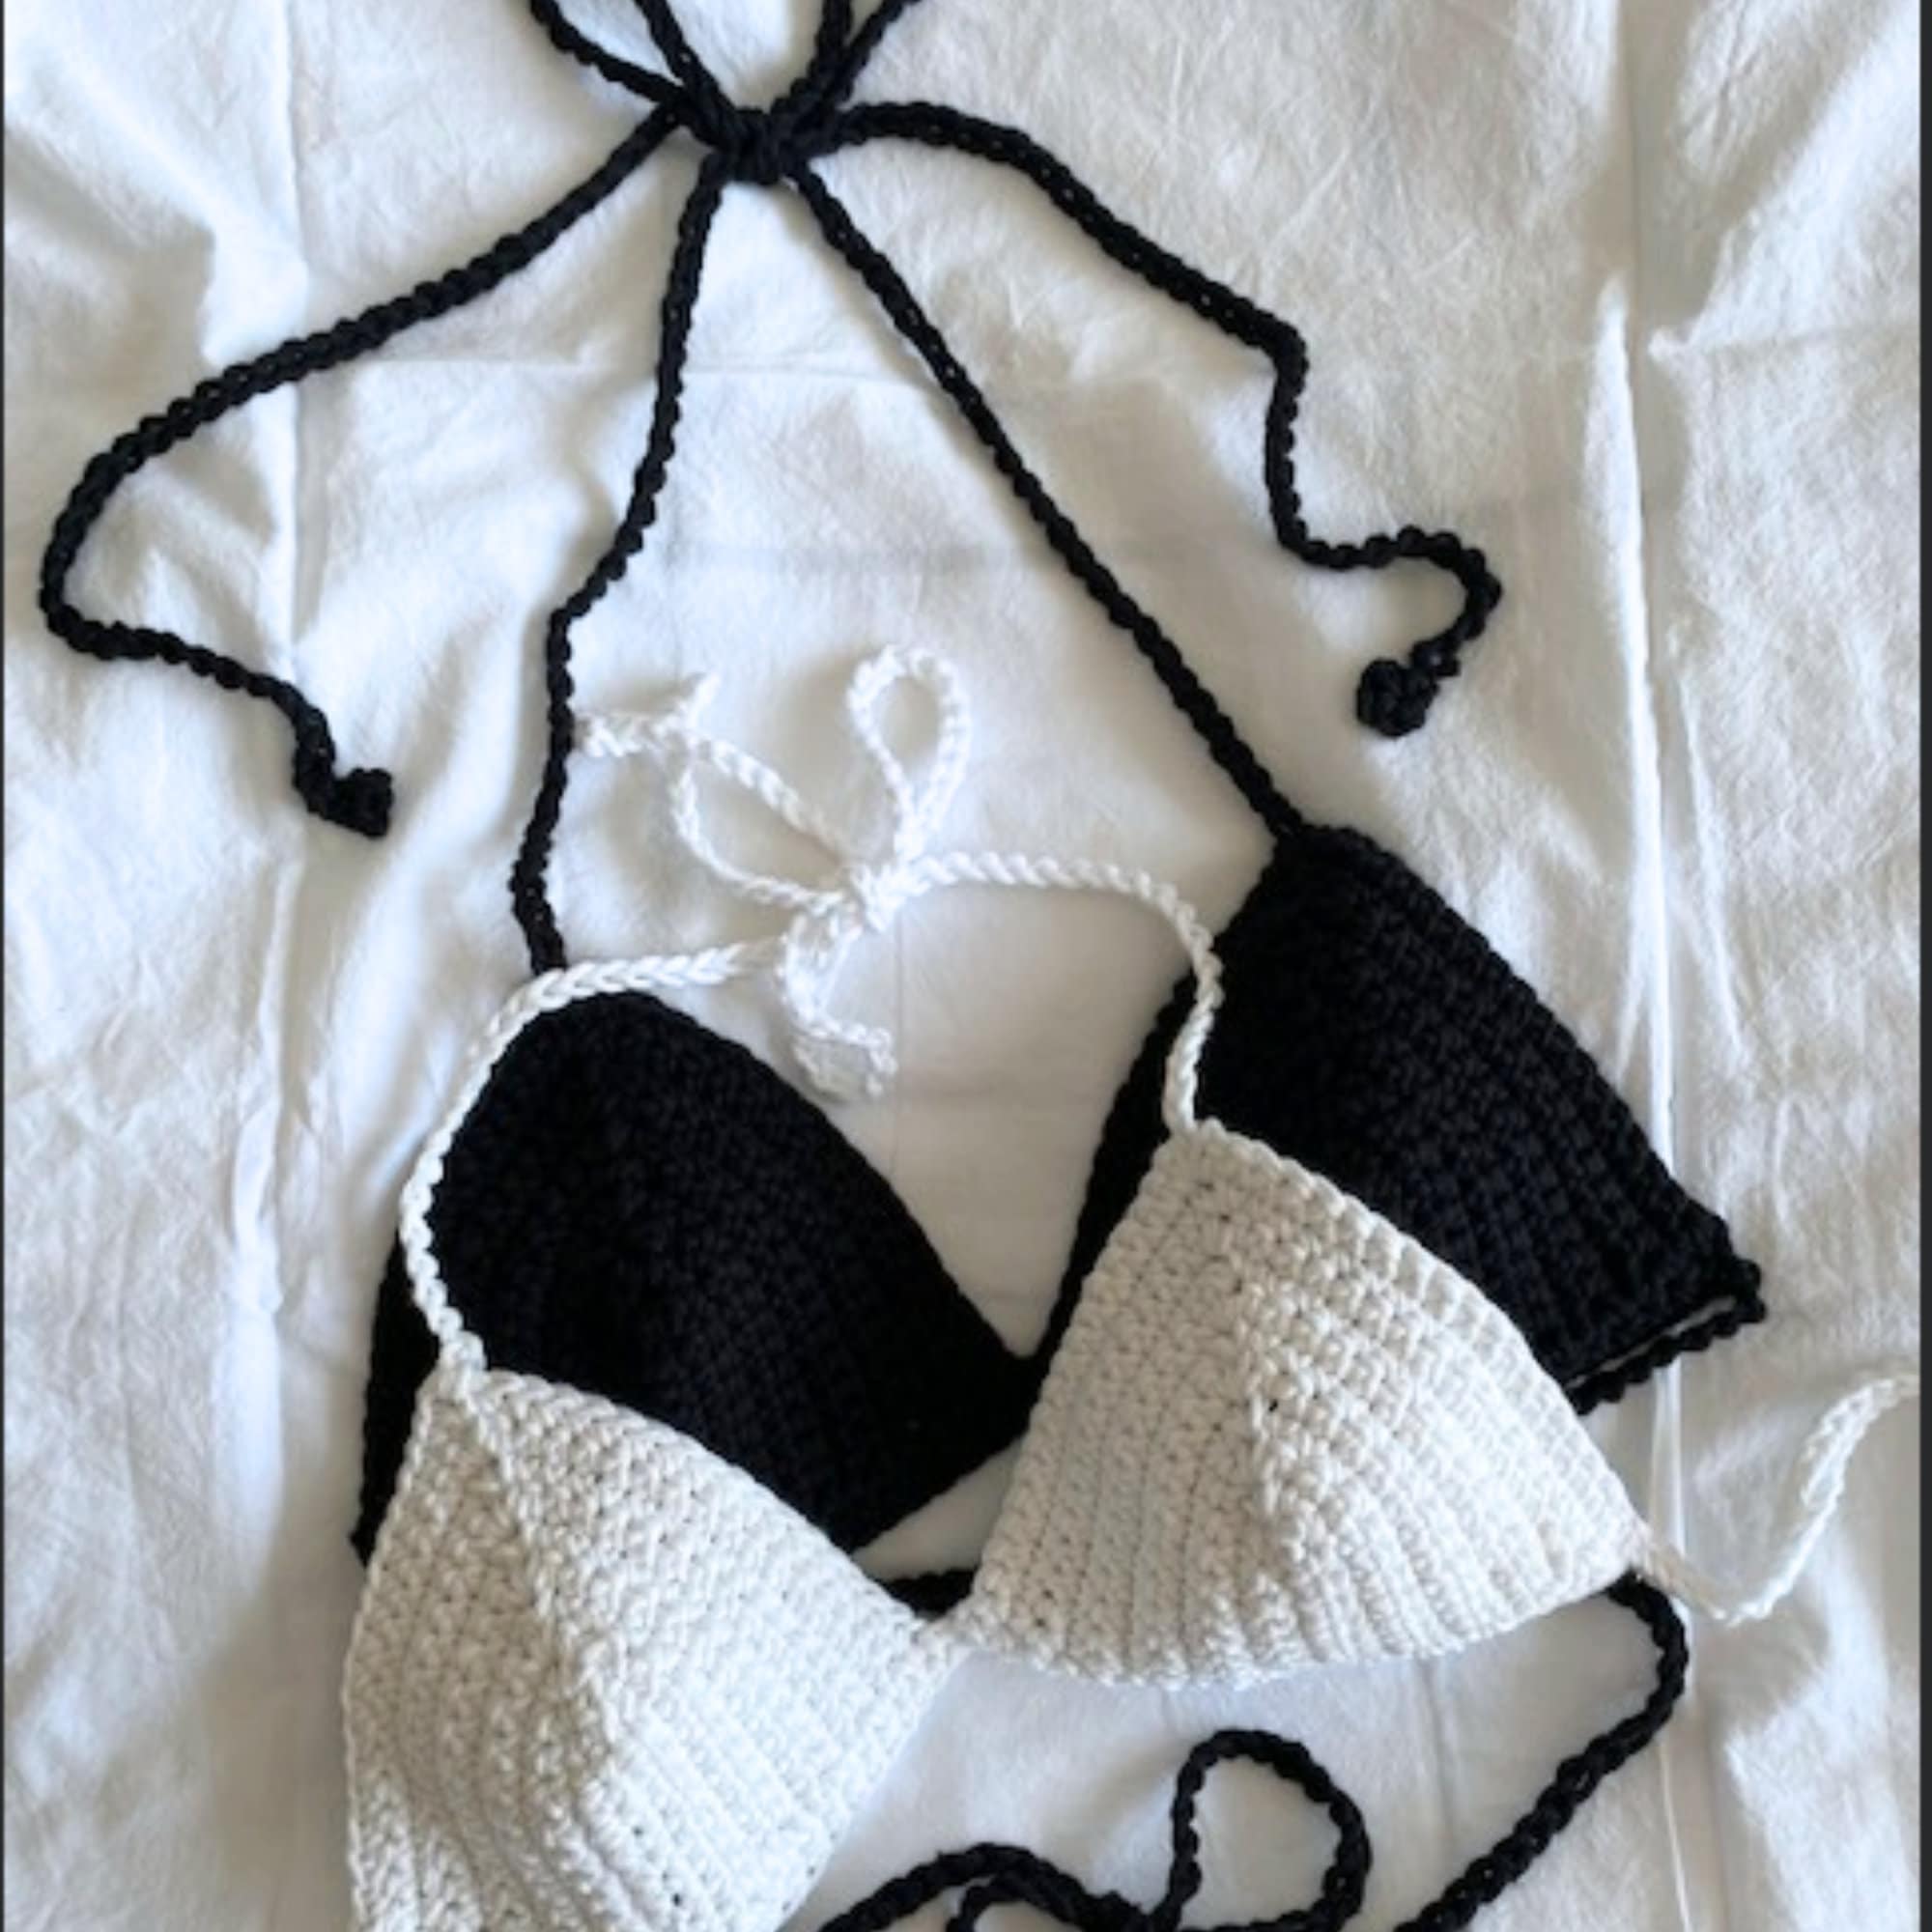 Crochet PATTERN: basic Bralette Tutorial / Curvey Bralette Tutorial / Easy Crochet  Bralette Pattern / Instant Download PDF 